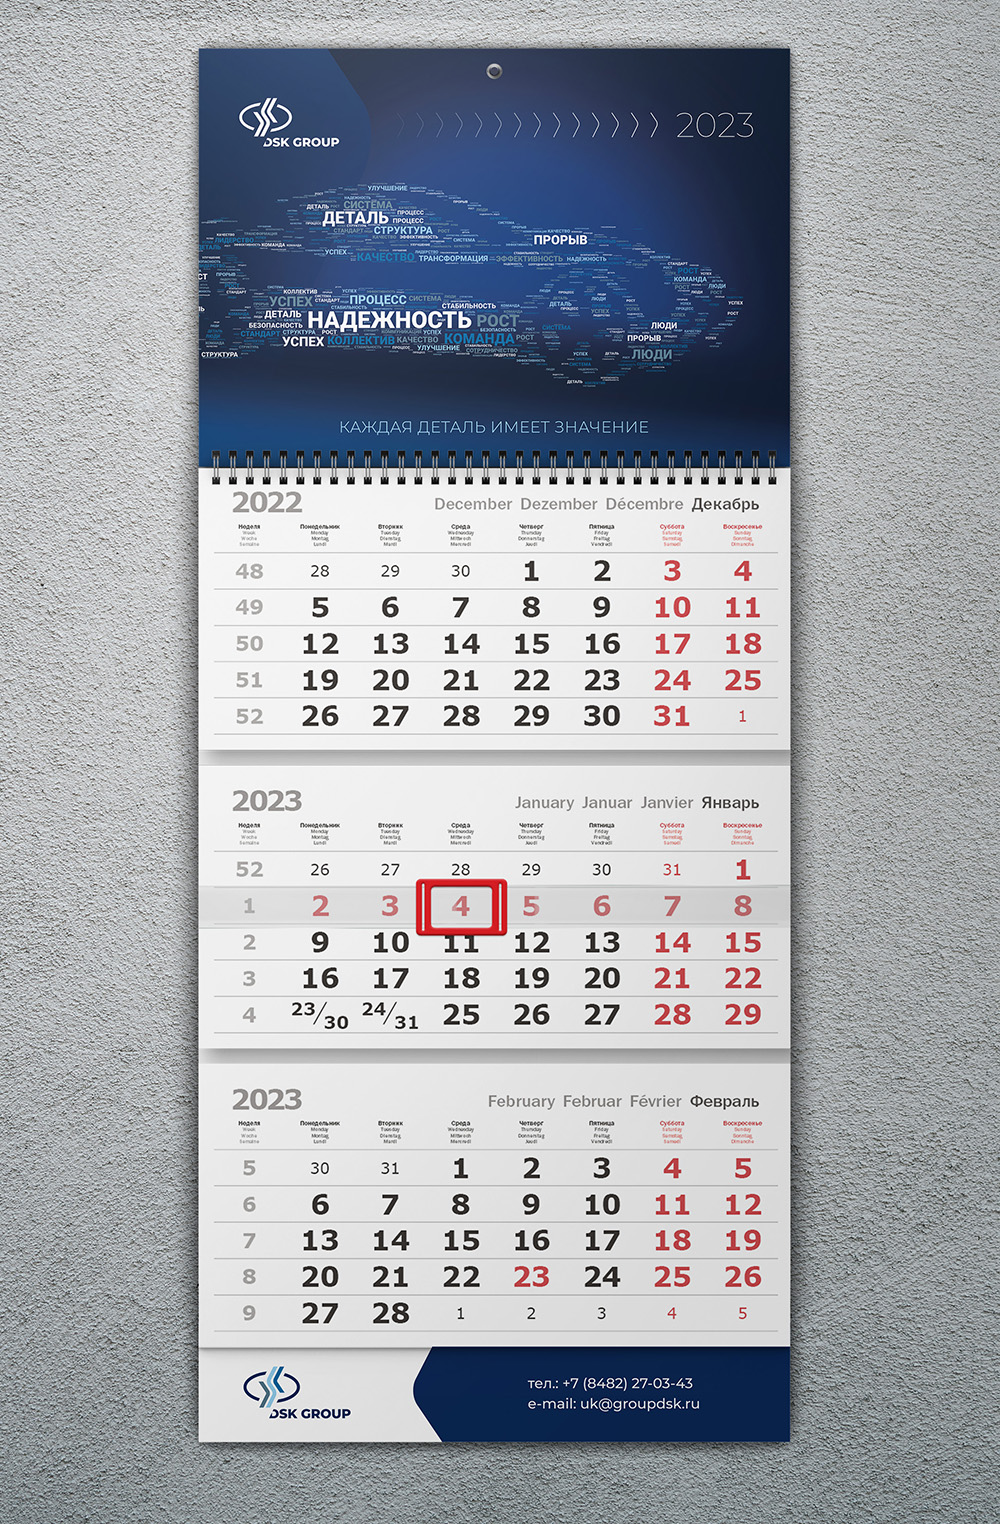 Квартальный календарь на 2023 год для холдинга DSK GROUP